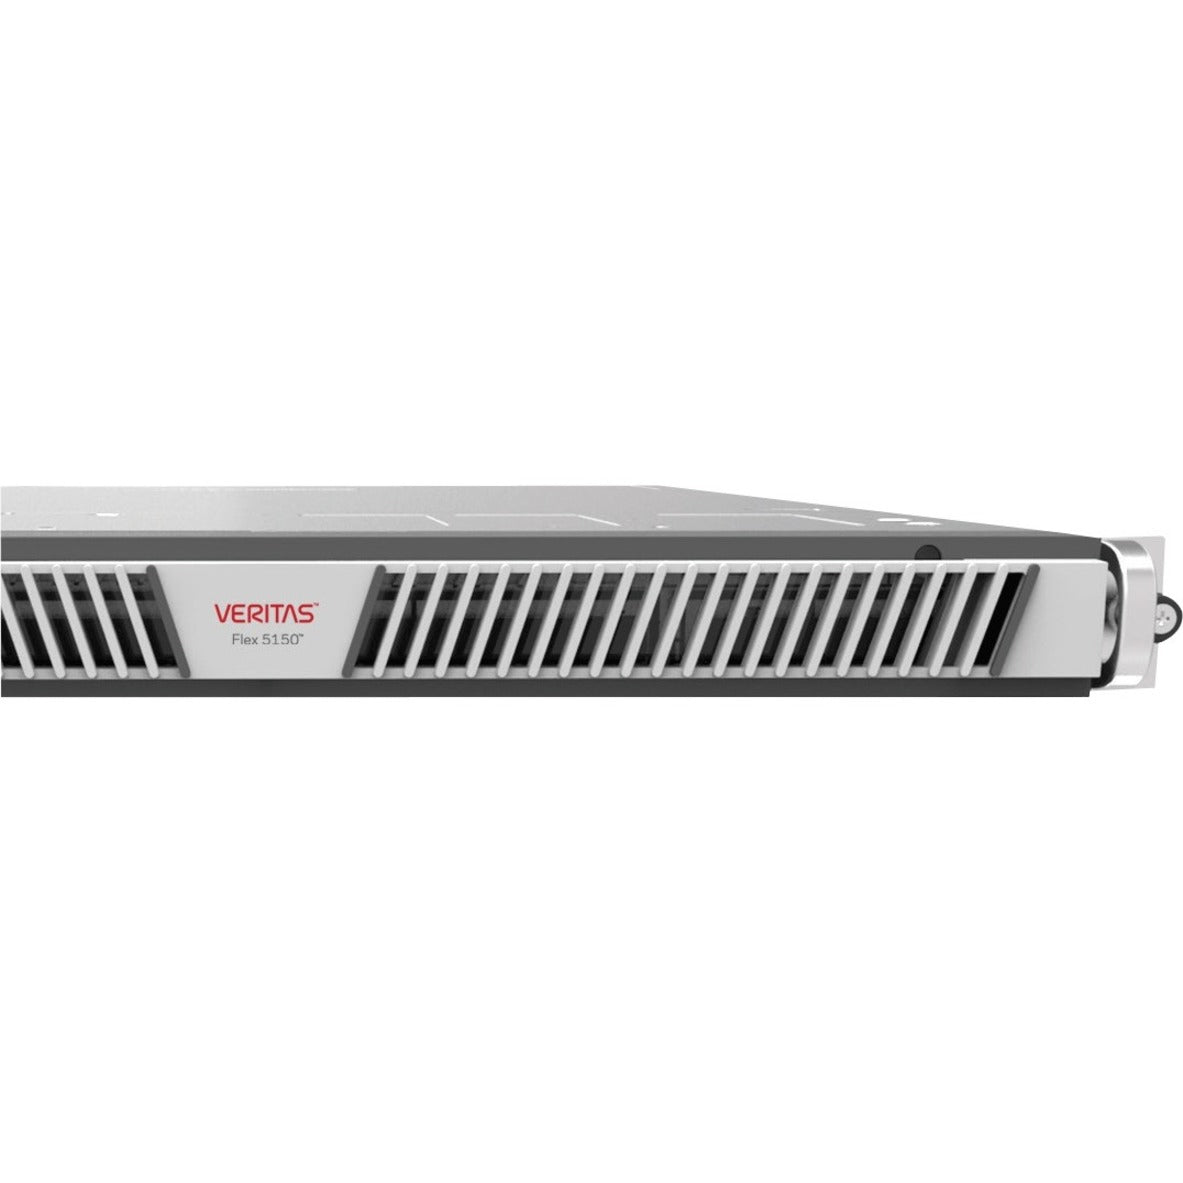 Veritas 26118-M0034 Flex System 5150 NAS Storage System, 15TB Total Hard Drive Capacity Installed, 12Gb/s SAS Controller, 8 Network (RJ-45) Ports